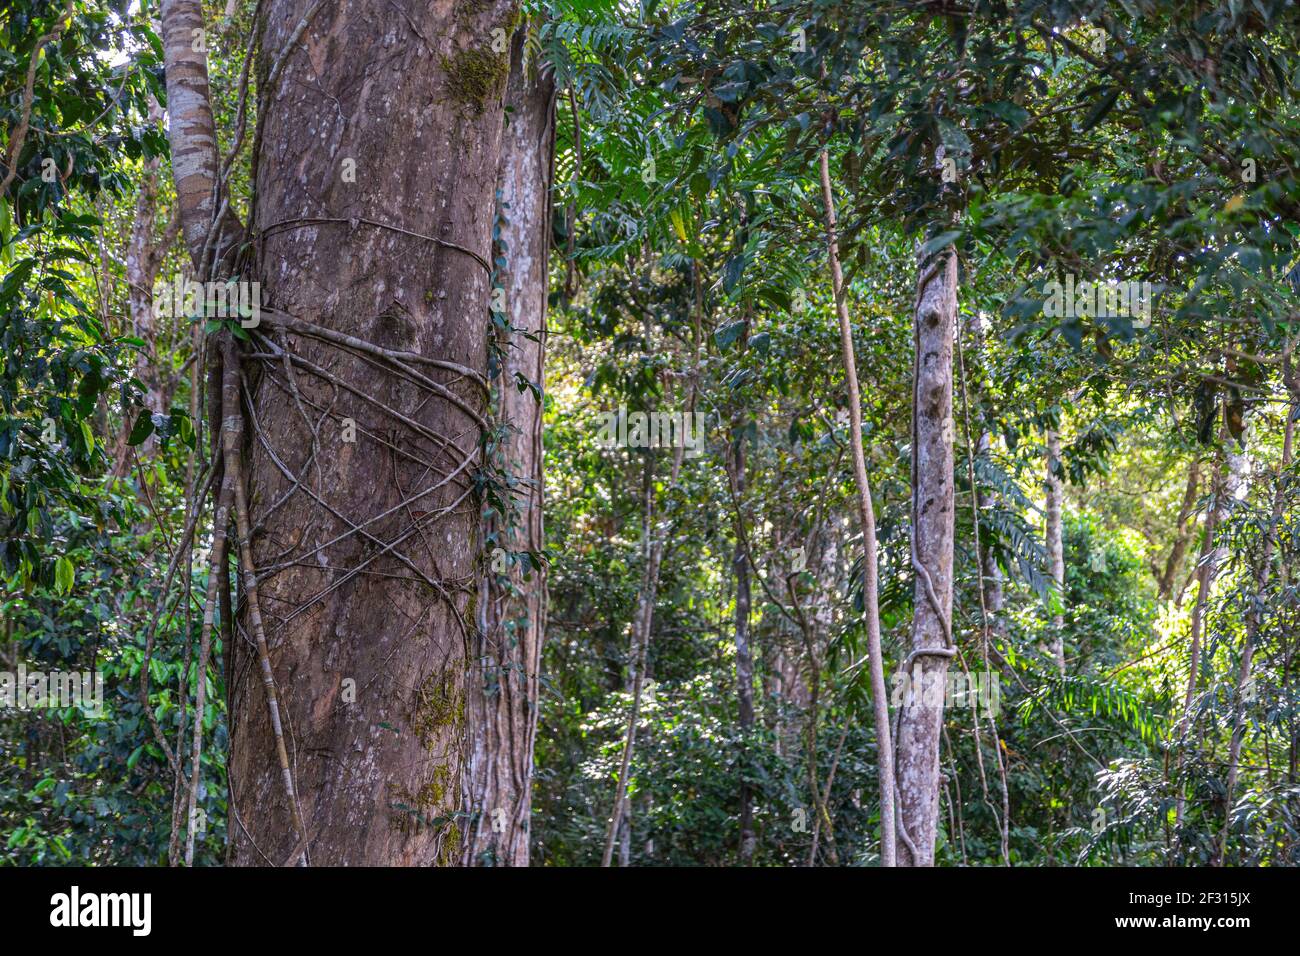 Trees in the Mamu Rainforest in Queensland, Australia Stock Photo